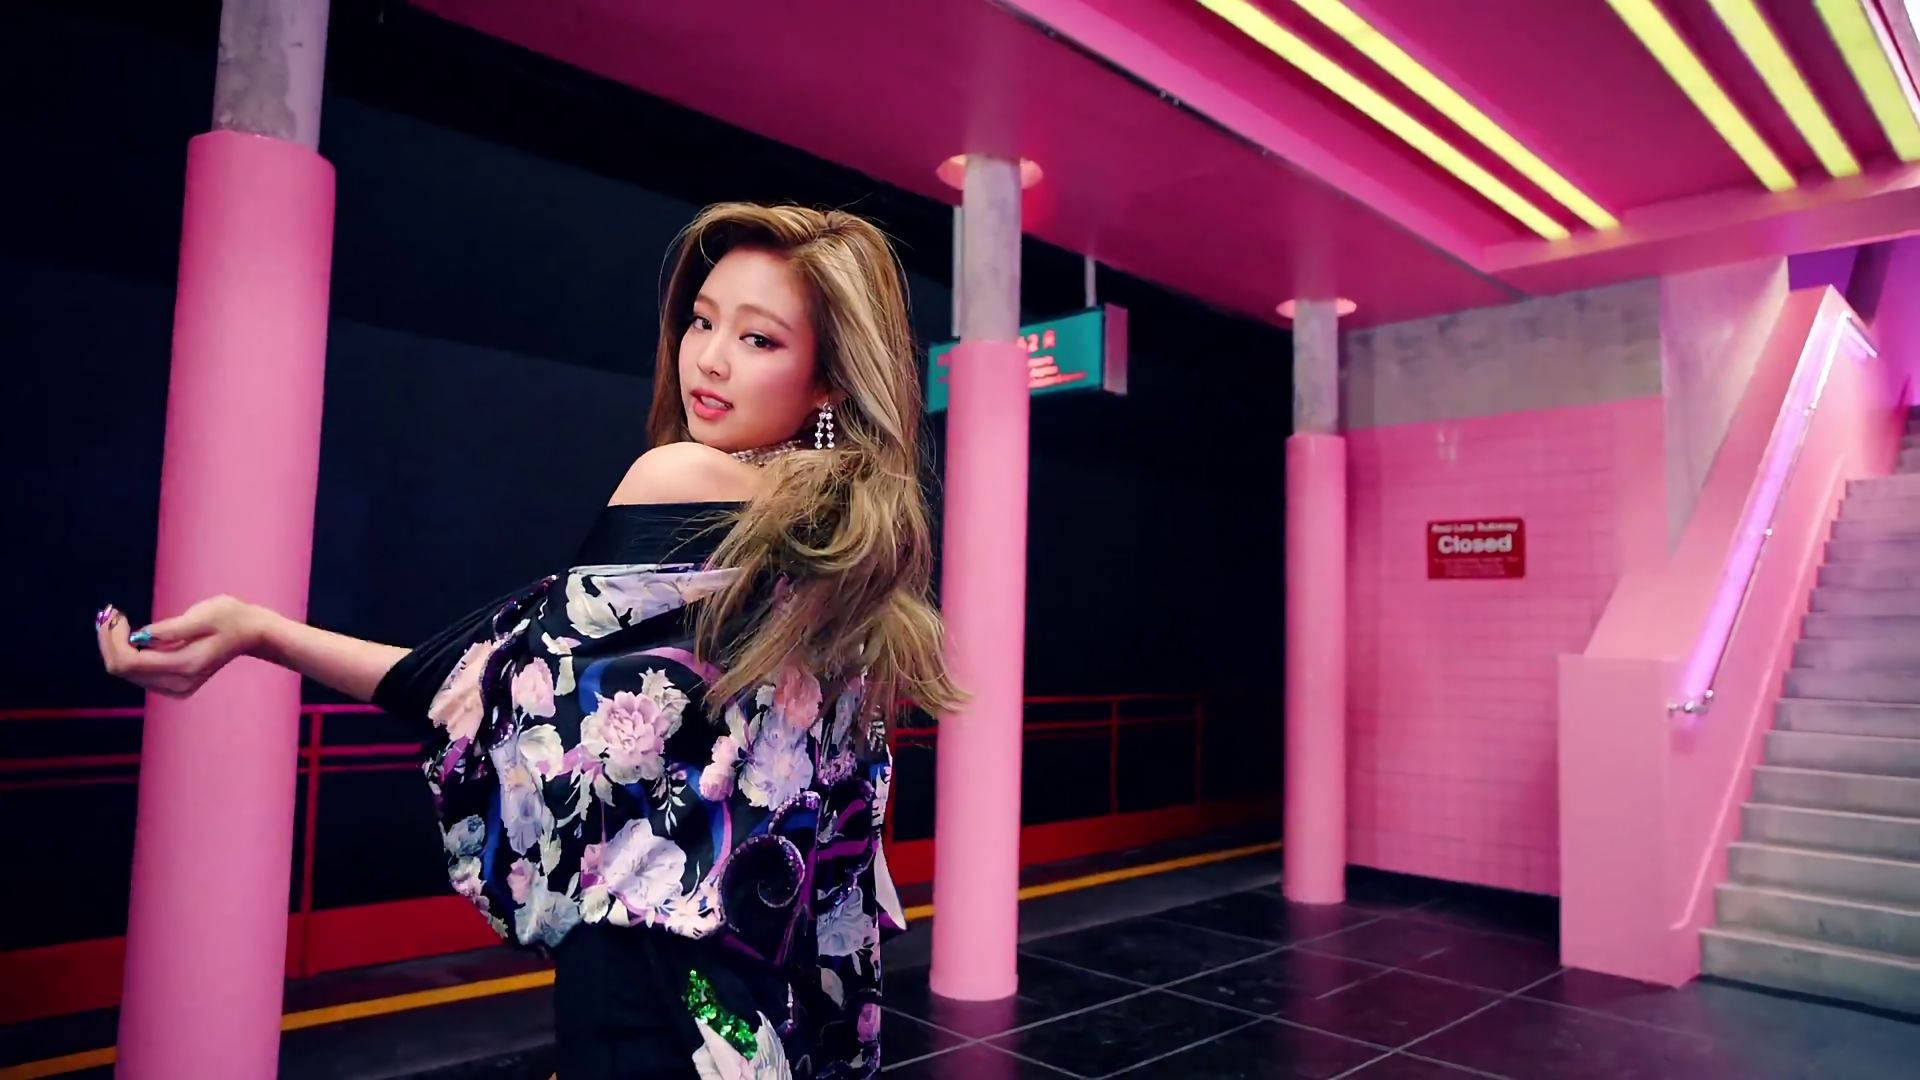 Gorgeous Jennie Kim In Pink Hall Background